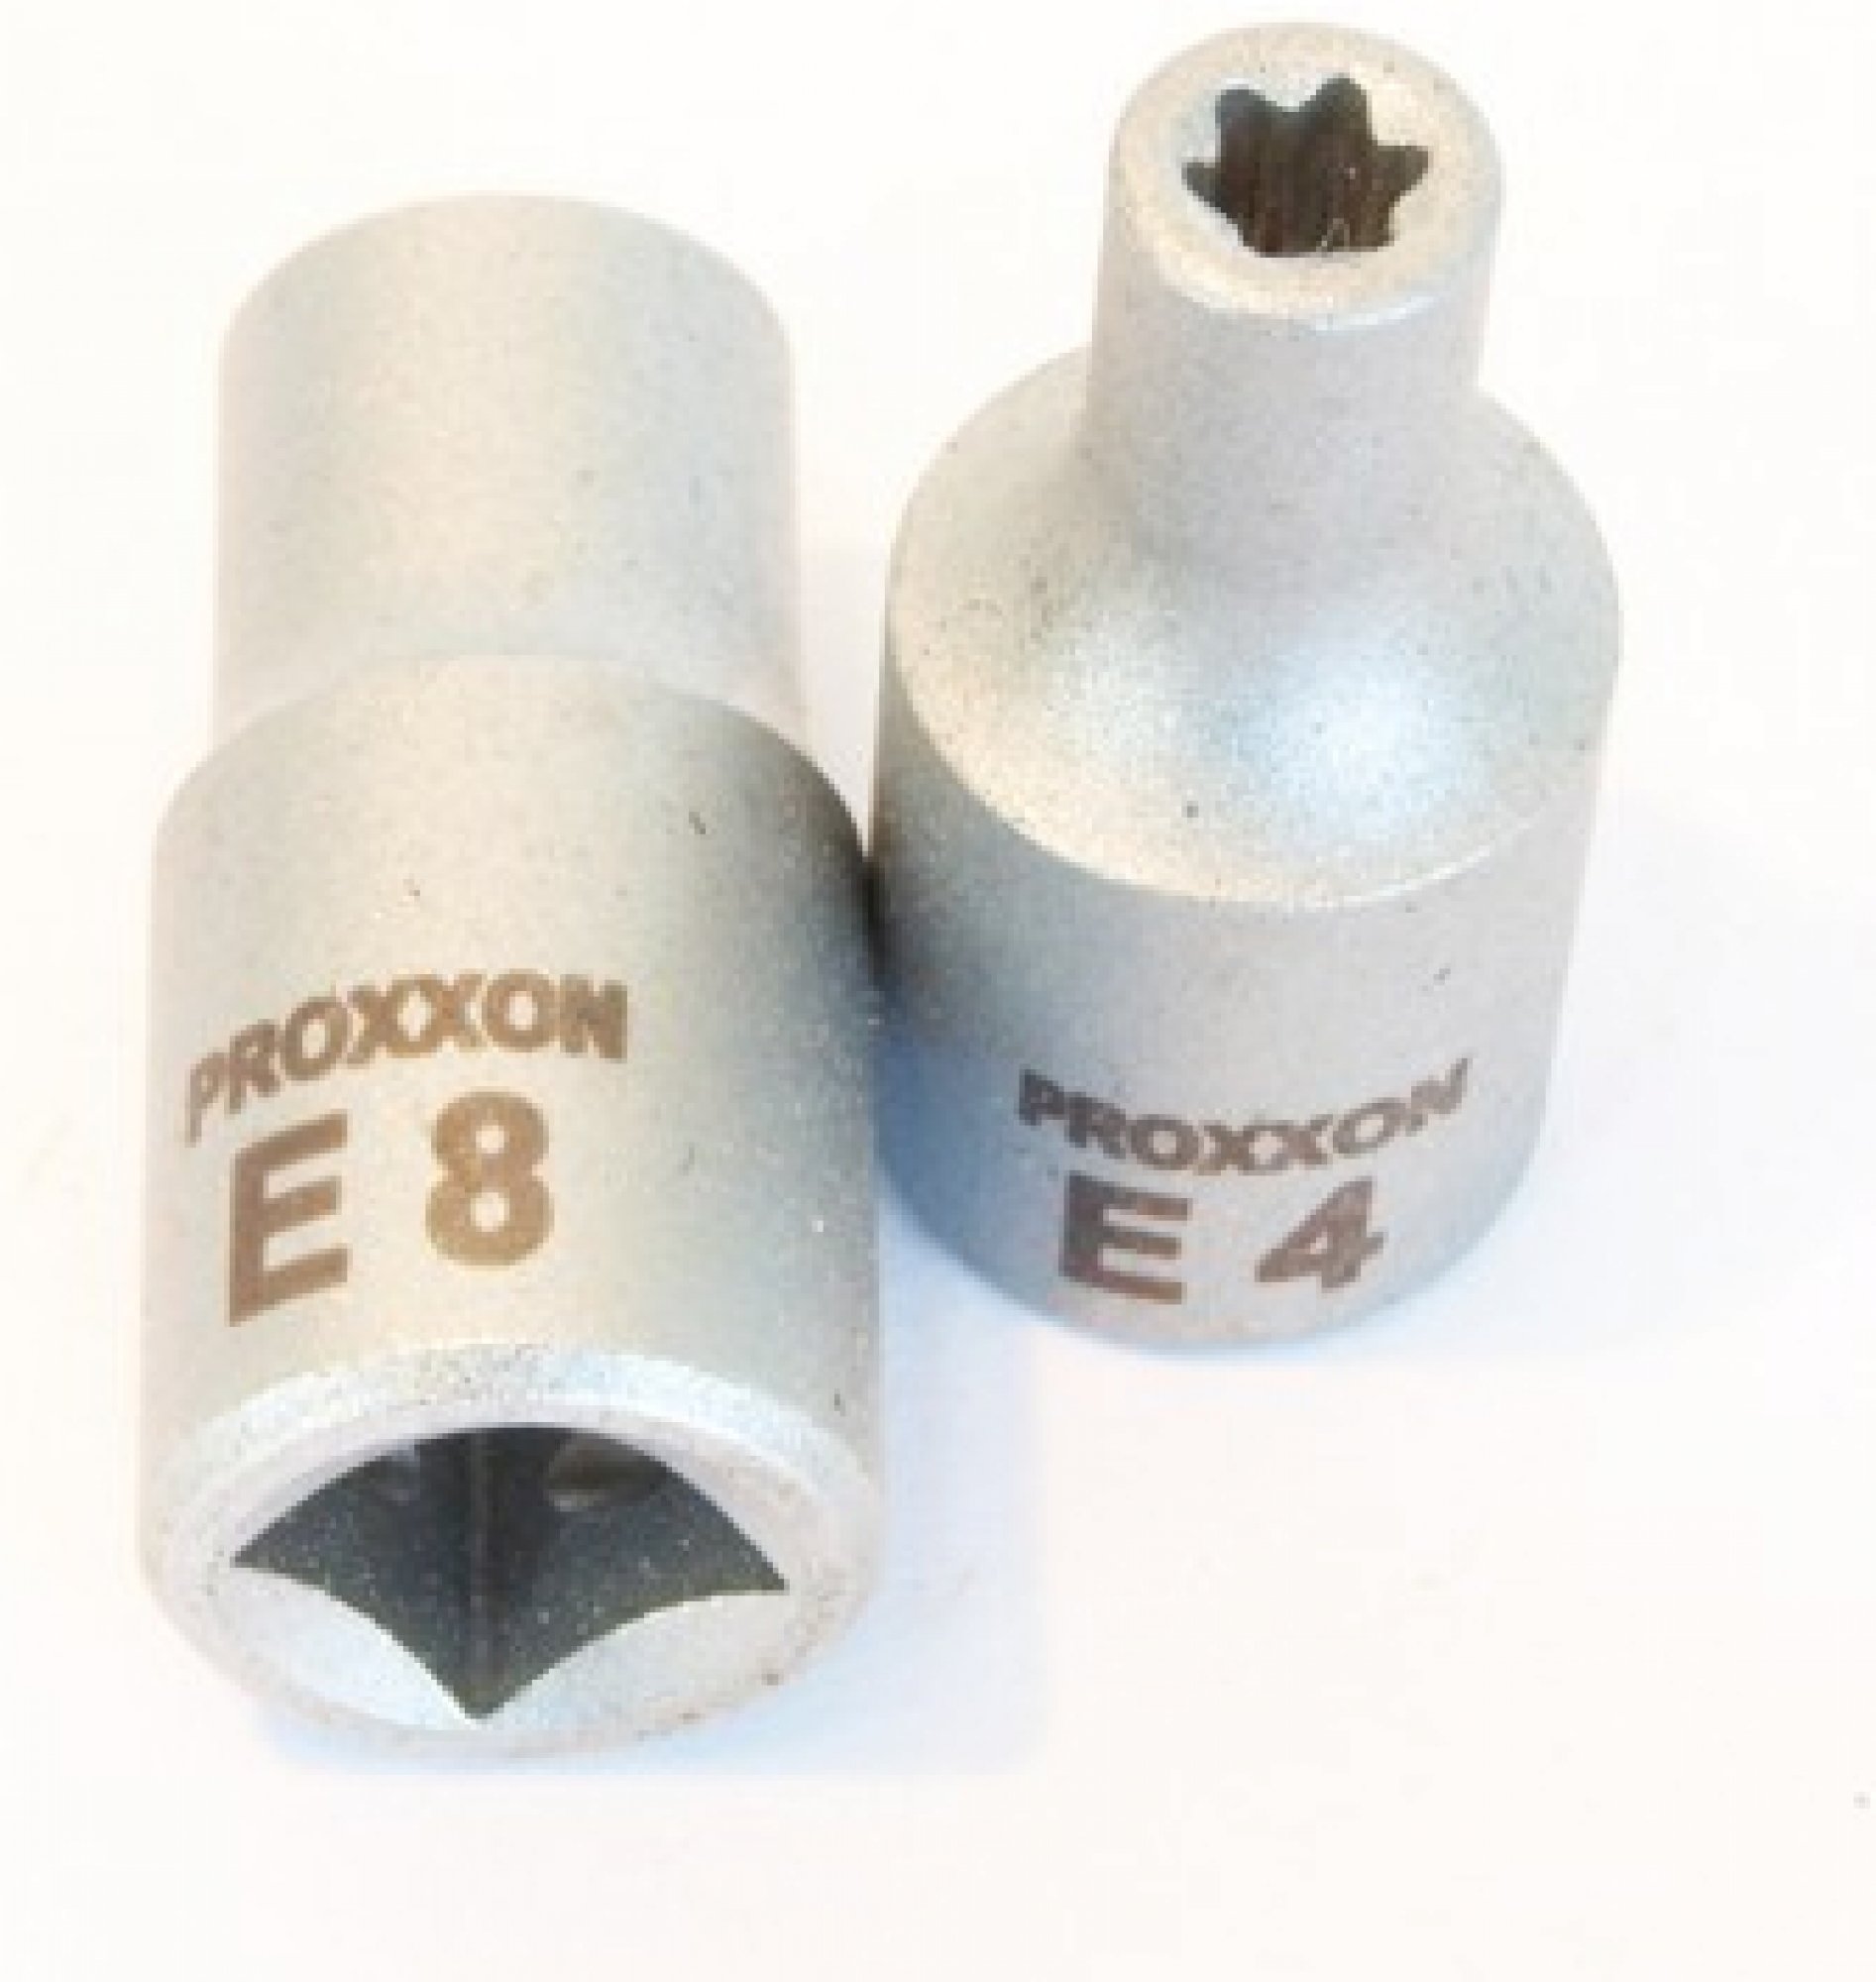 Hlavica Proxxon Torx E8 1/4"  23794 - AG Náradie